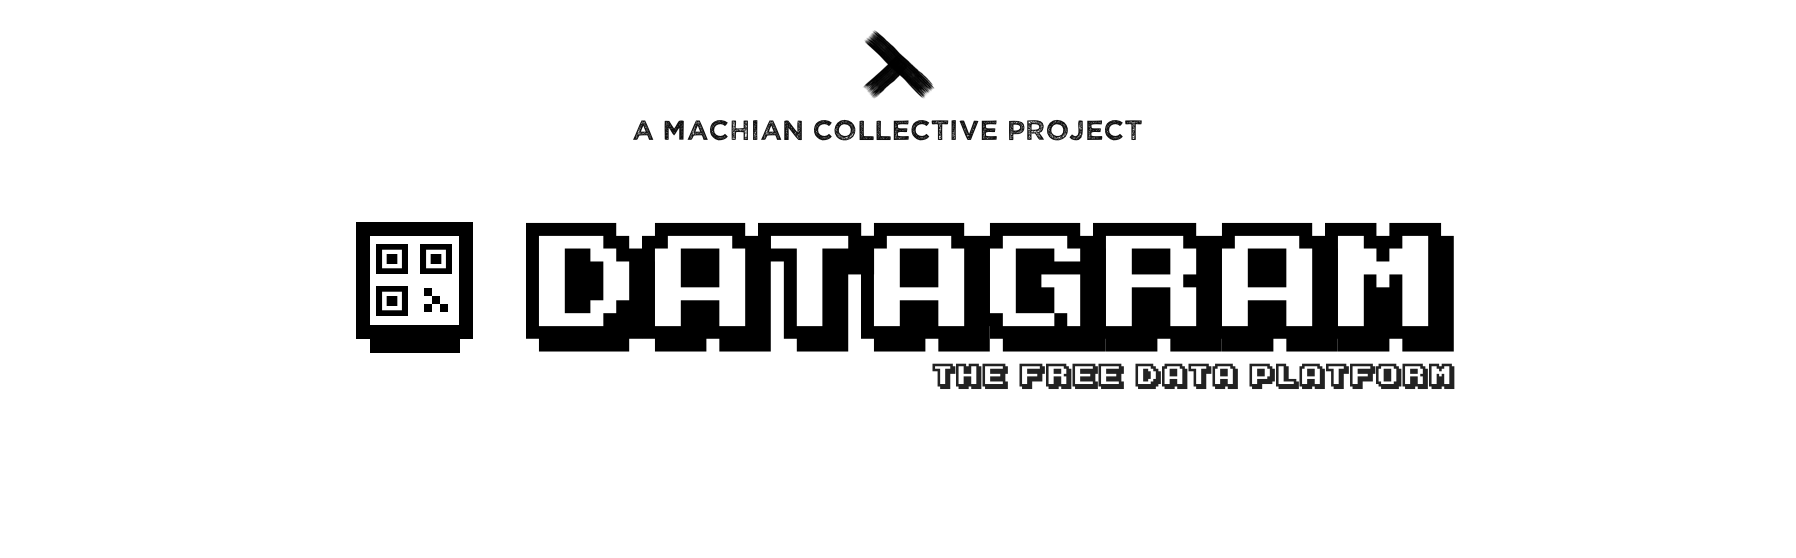 Datagram, the free data platform